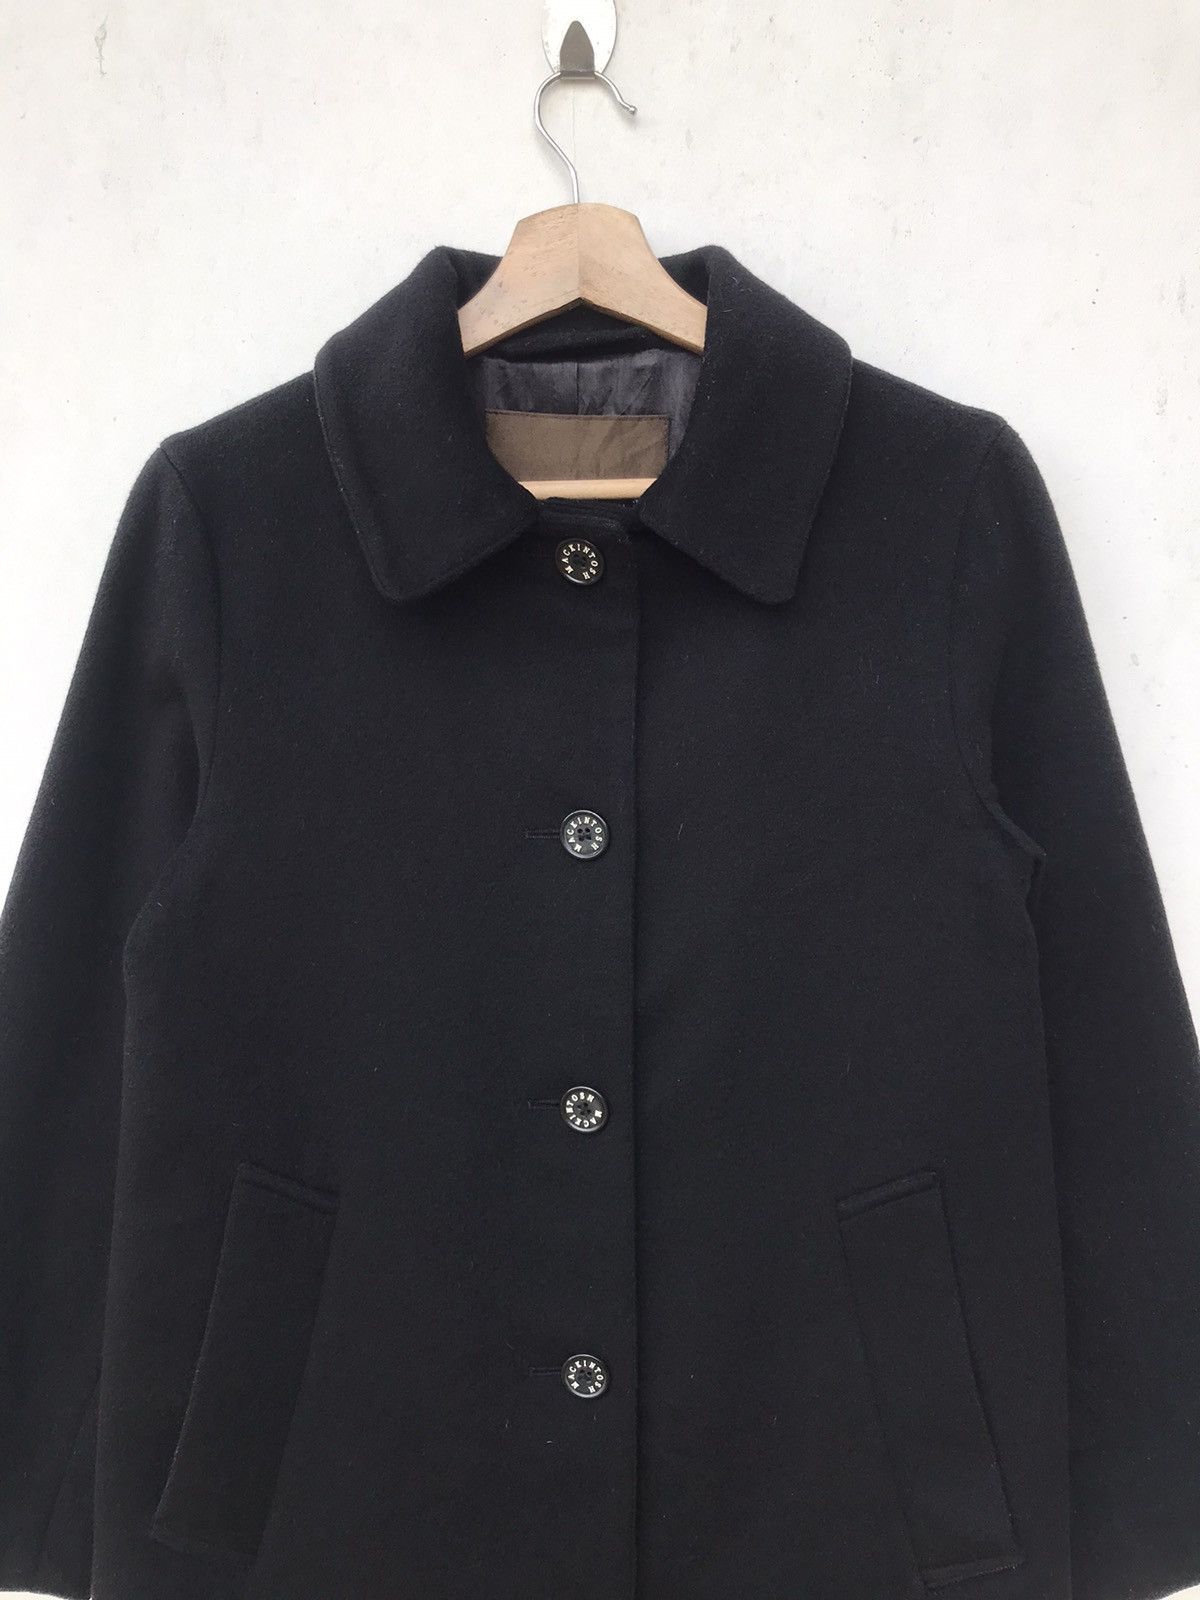 Mackintosh Wool Made in Scotland Long Coat Jacket - 5